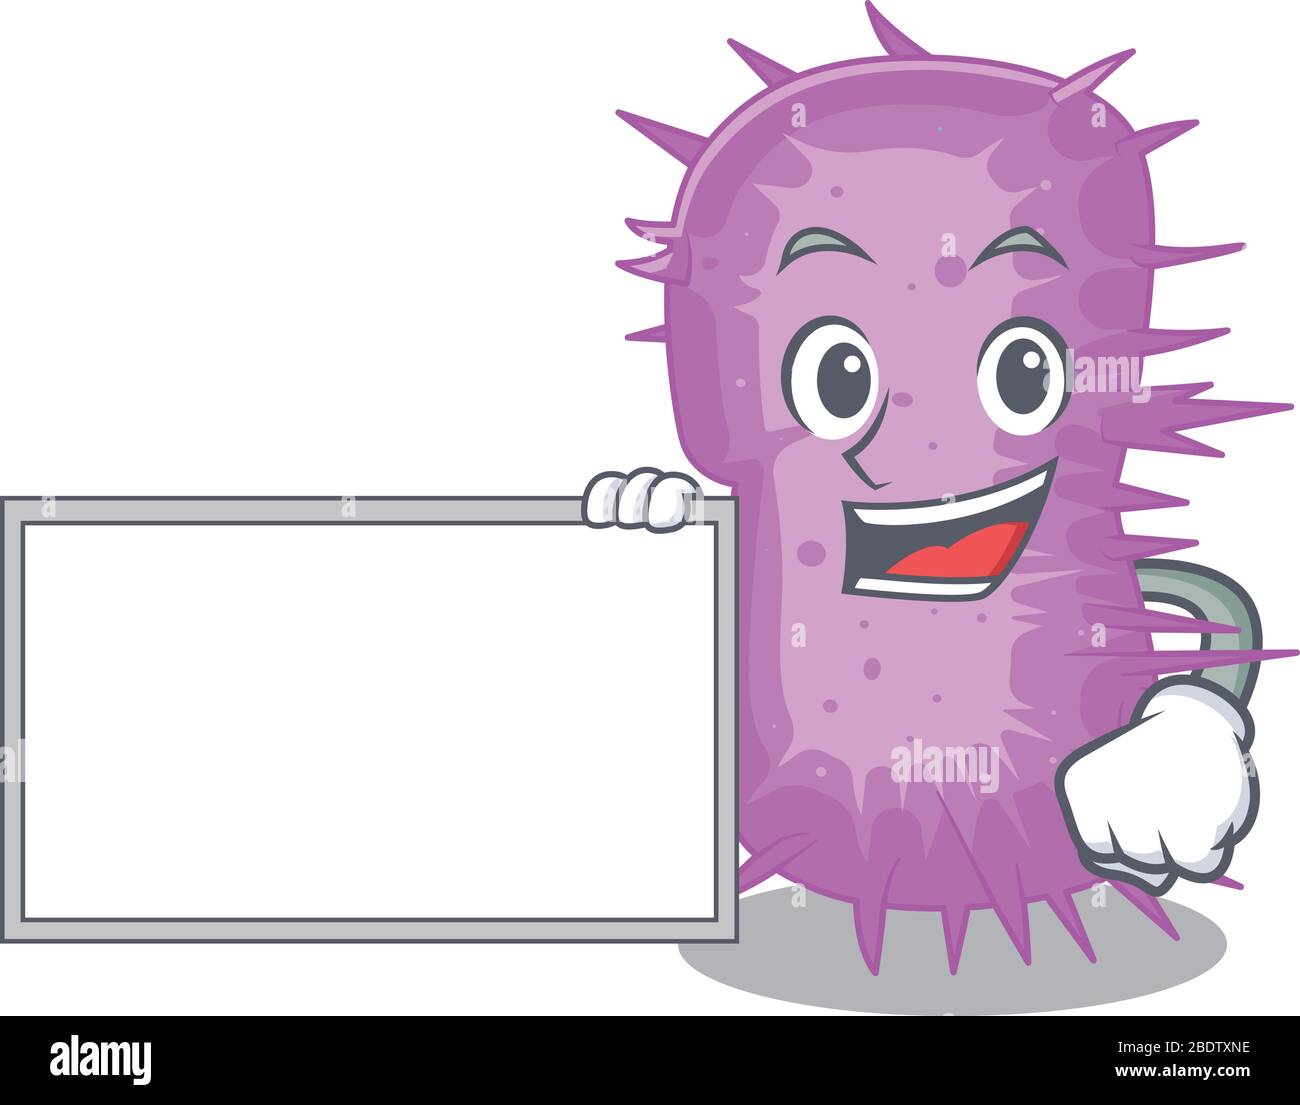 acinetobacter baumannii cartoon character design style with board Stock Vector